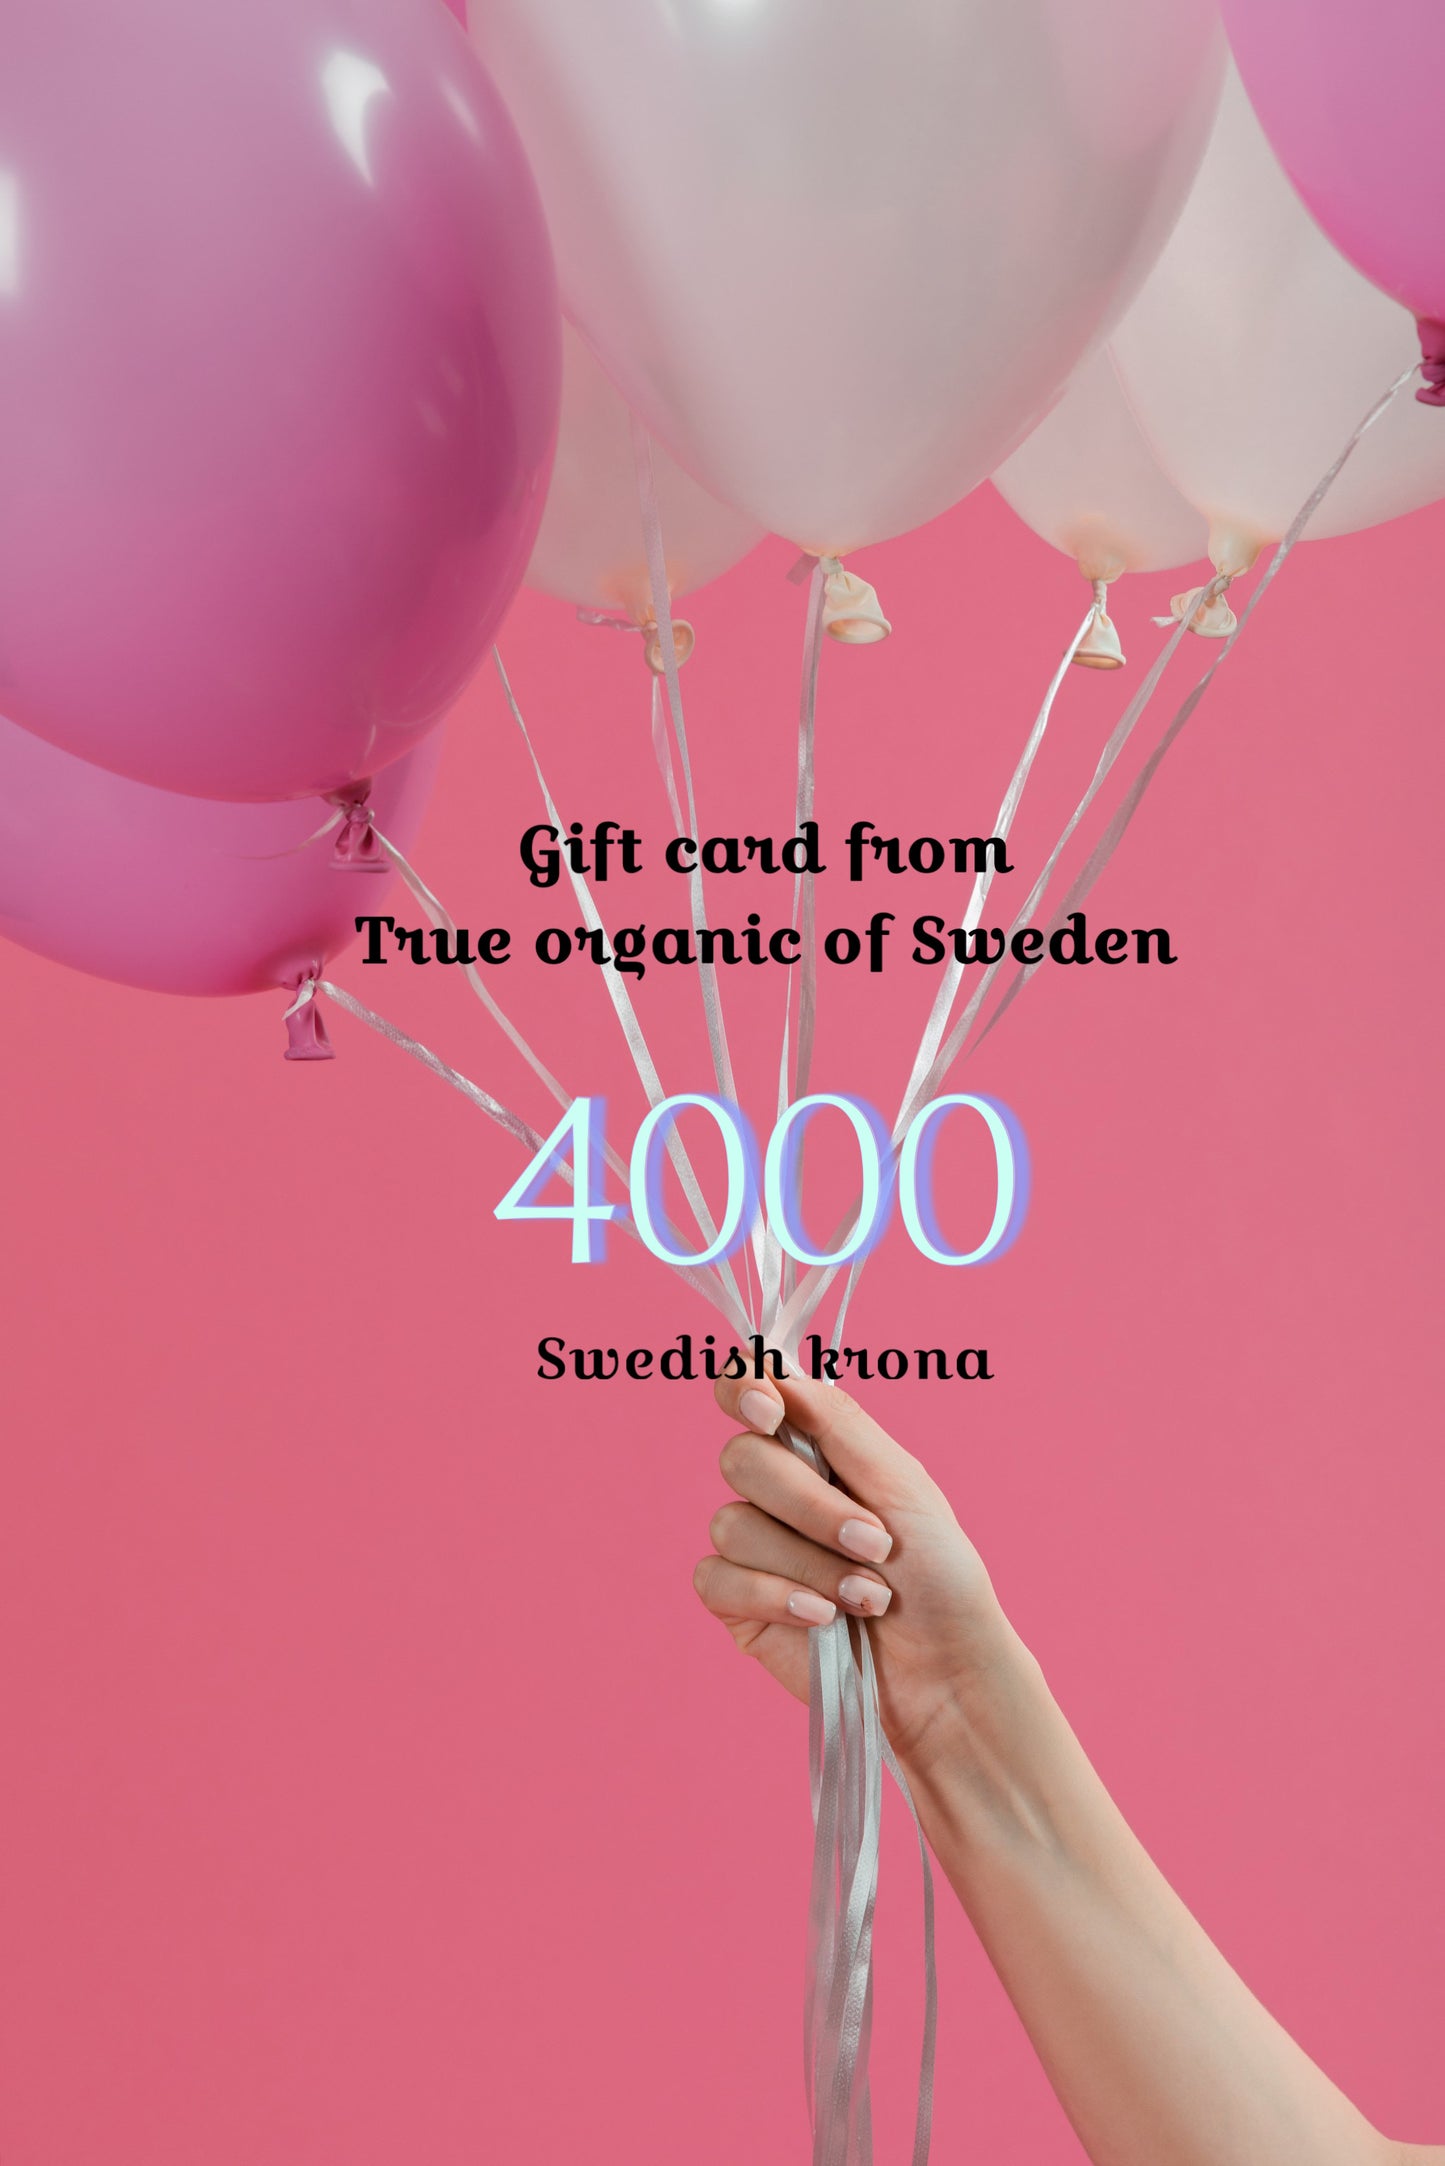 Gift card from True organic of Sweden 4000 krona 